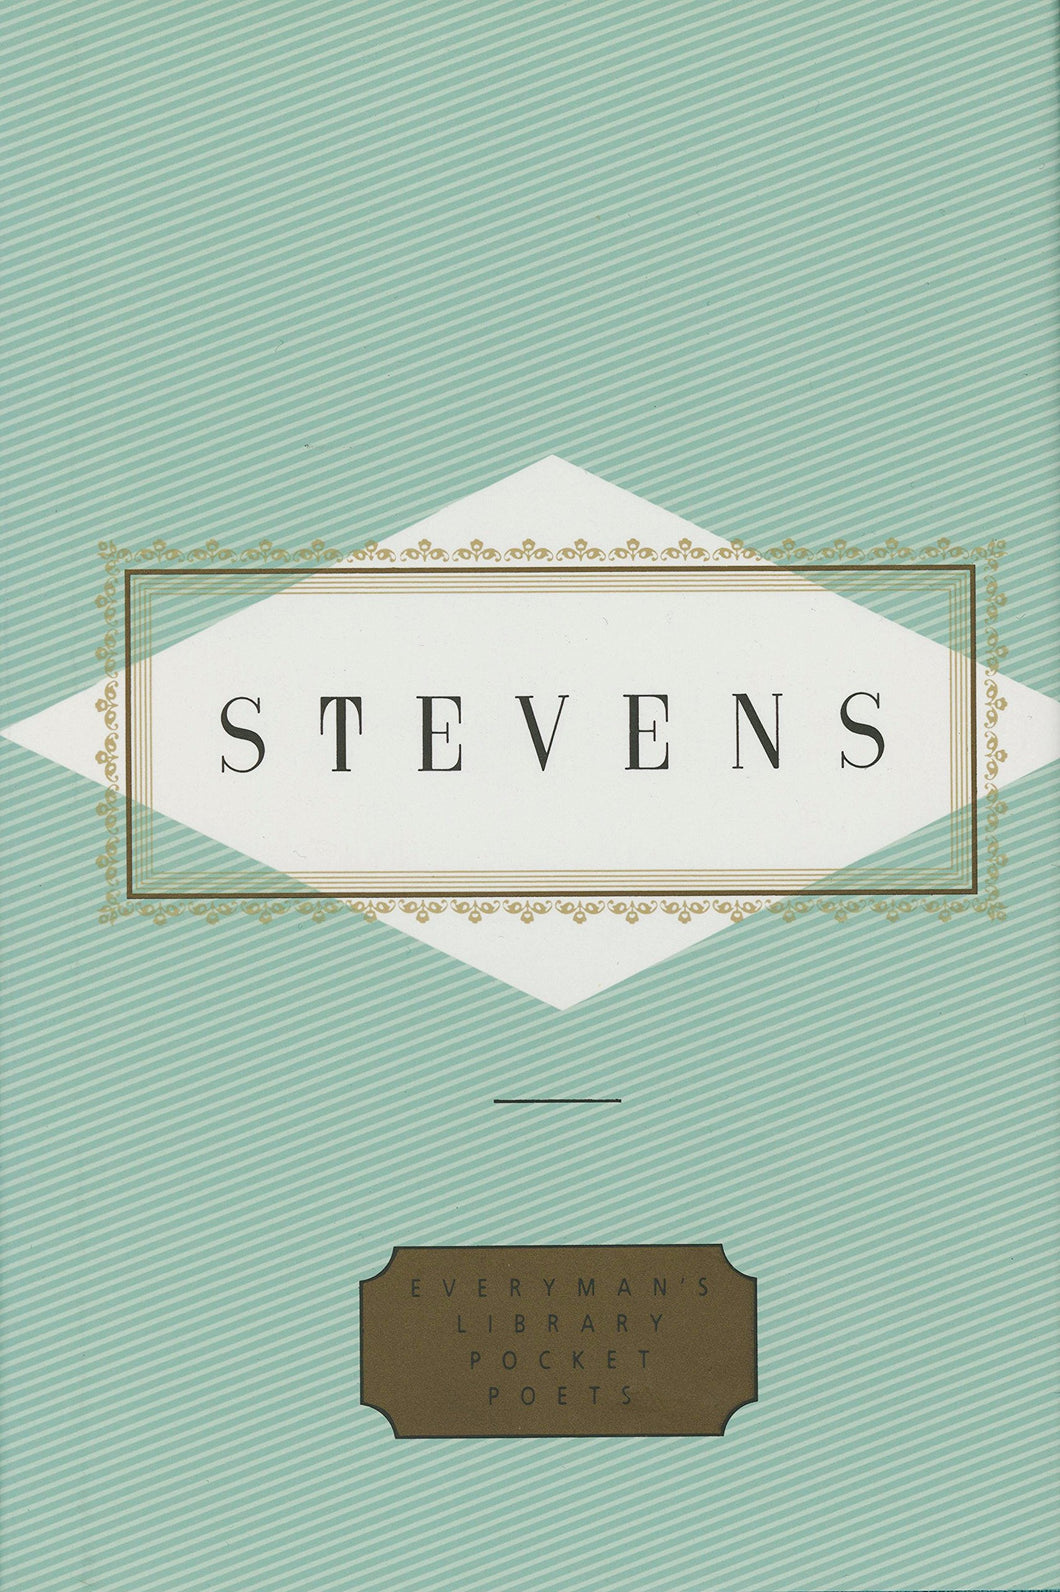 Stevens: Poems ร้านหนังสือและสิ่งของ เป็นร้านหนังสือภาษาอังกฤษหายาก และร้านกาแฟ หรือ บุ๊คคาเฟ่ ตั้งอยู่สุขุมวิท กรุงเทพ